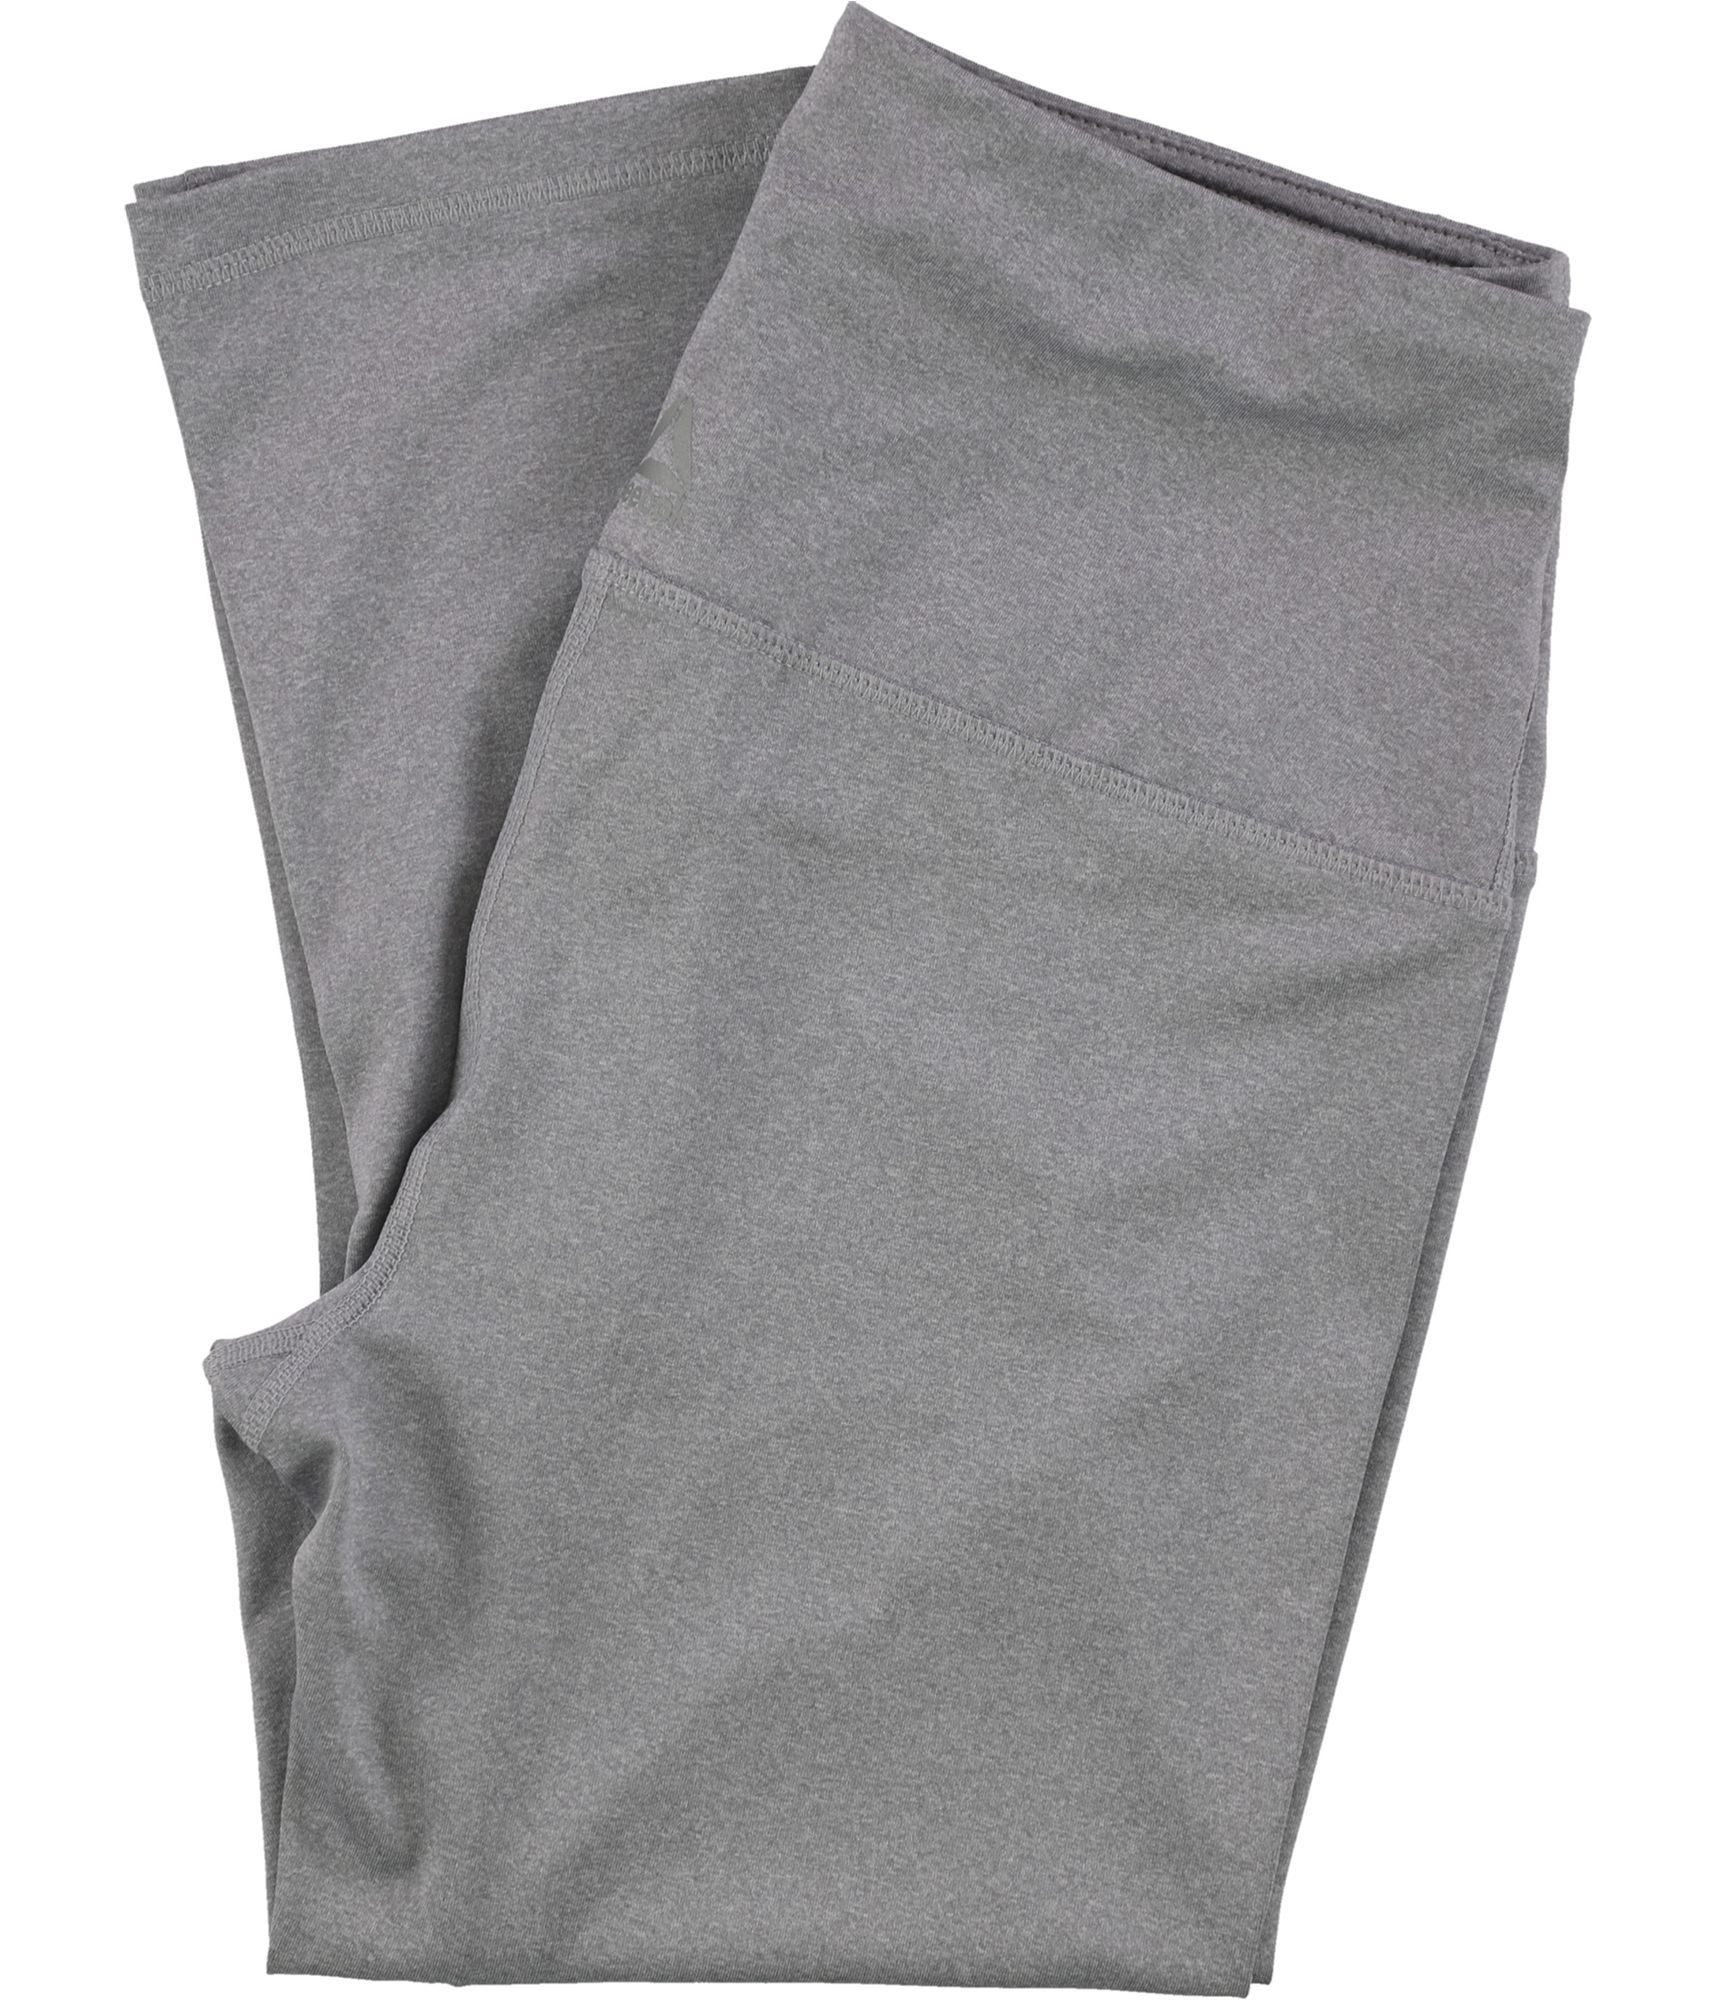 Reebok Womens Highrise Capri Compression Athletic Pants, Grey, Medium 